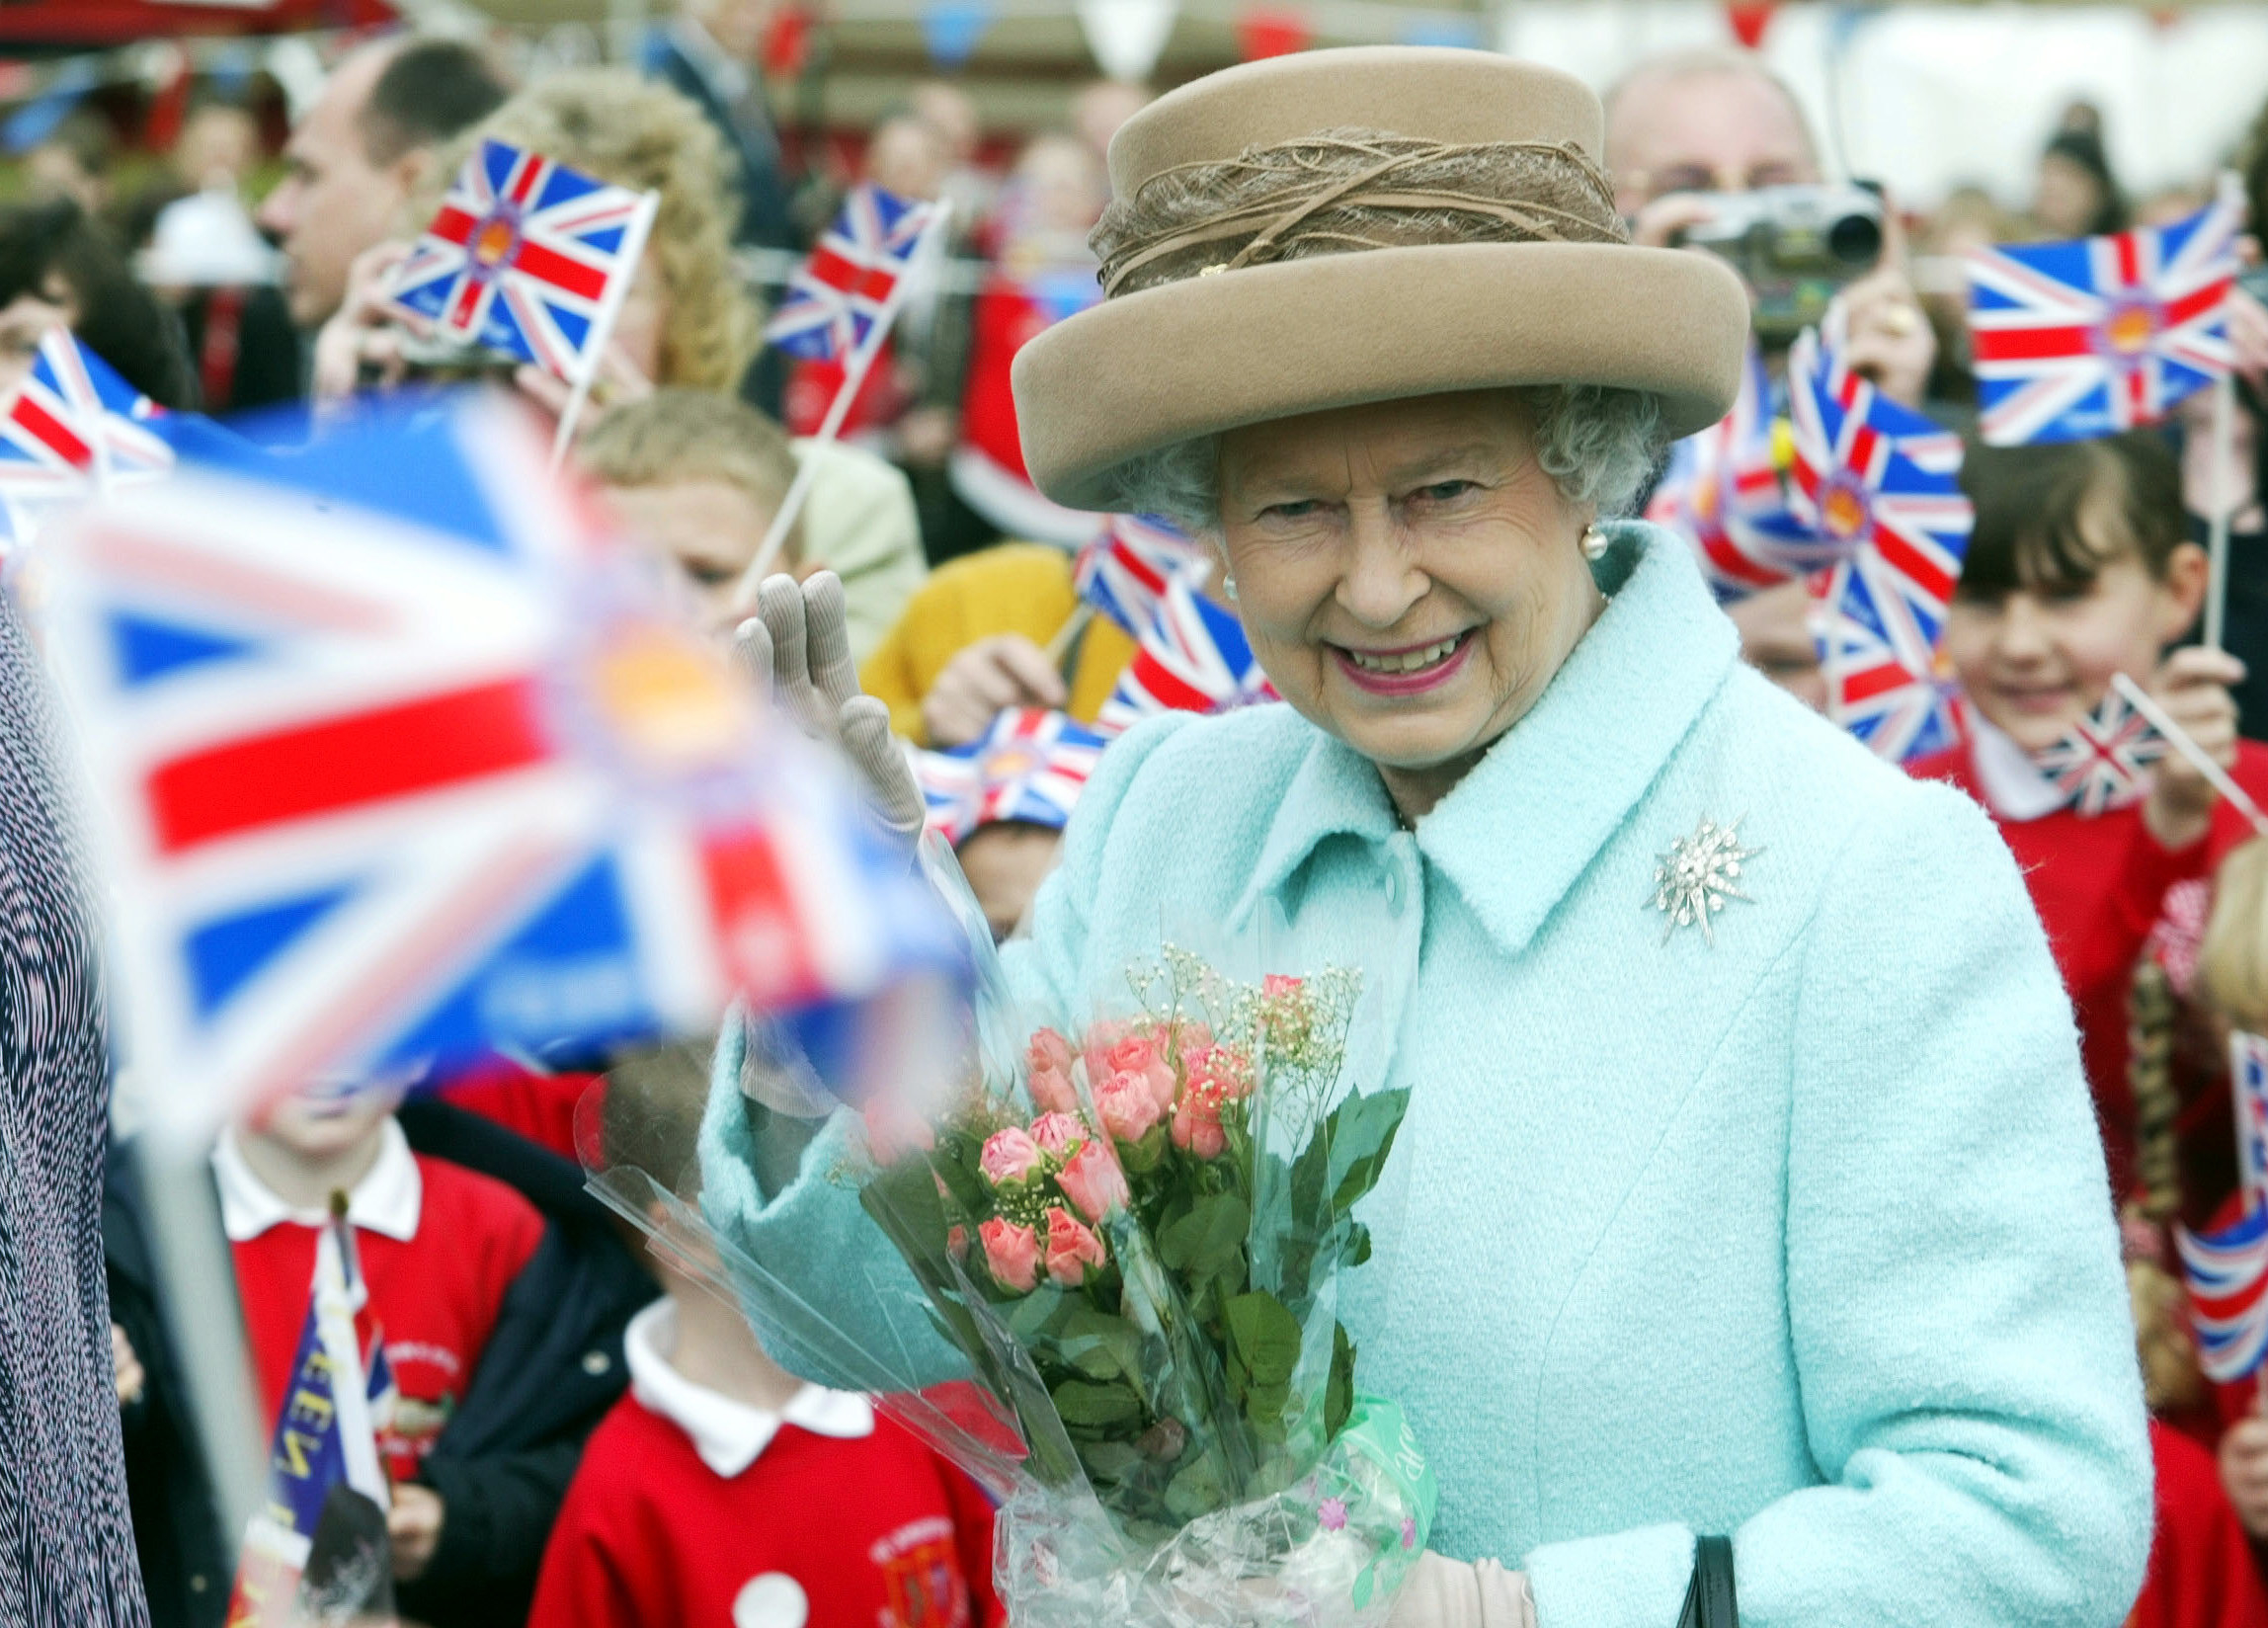 Queen Elizabeth II holding flowers among a crowd of people waving 